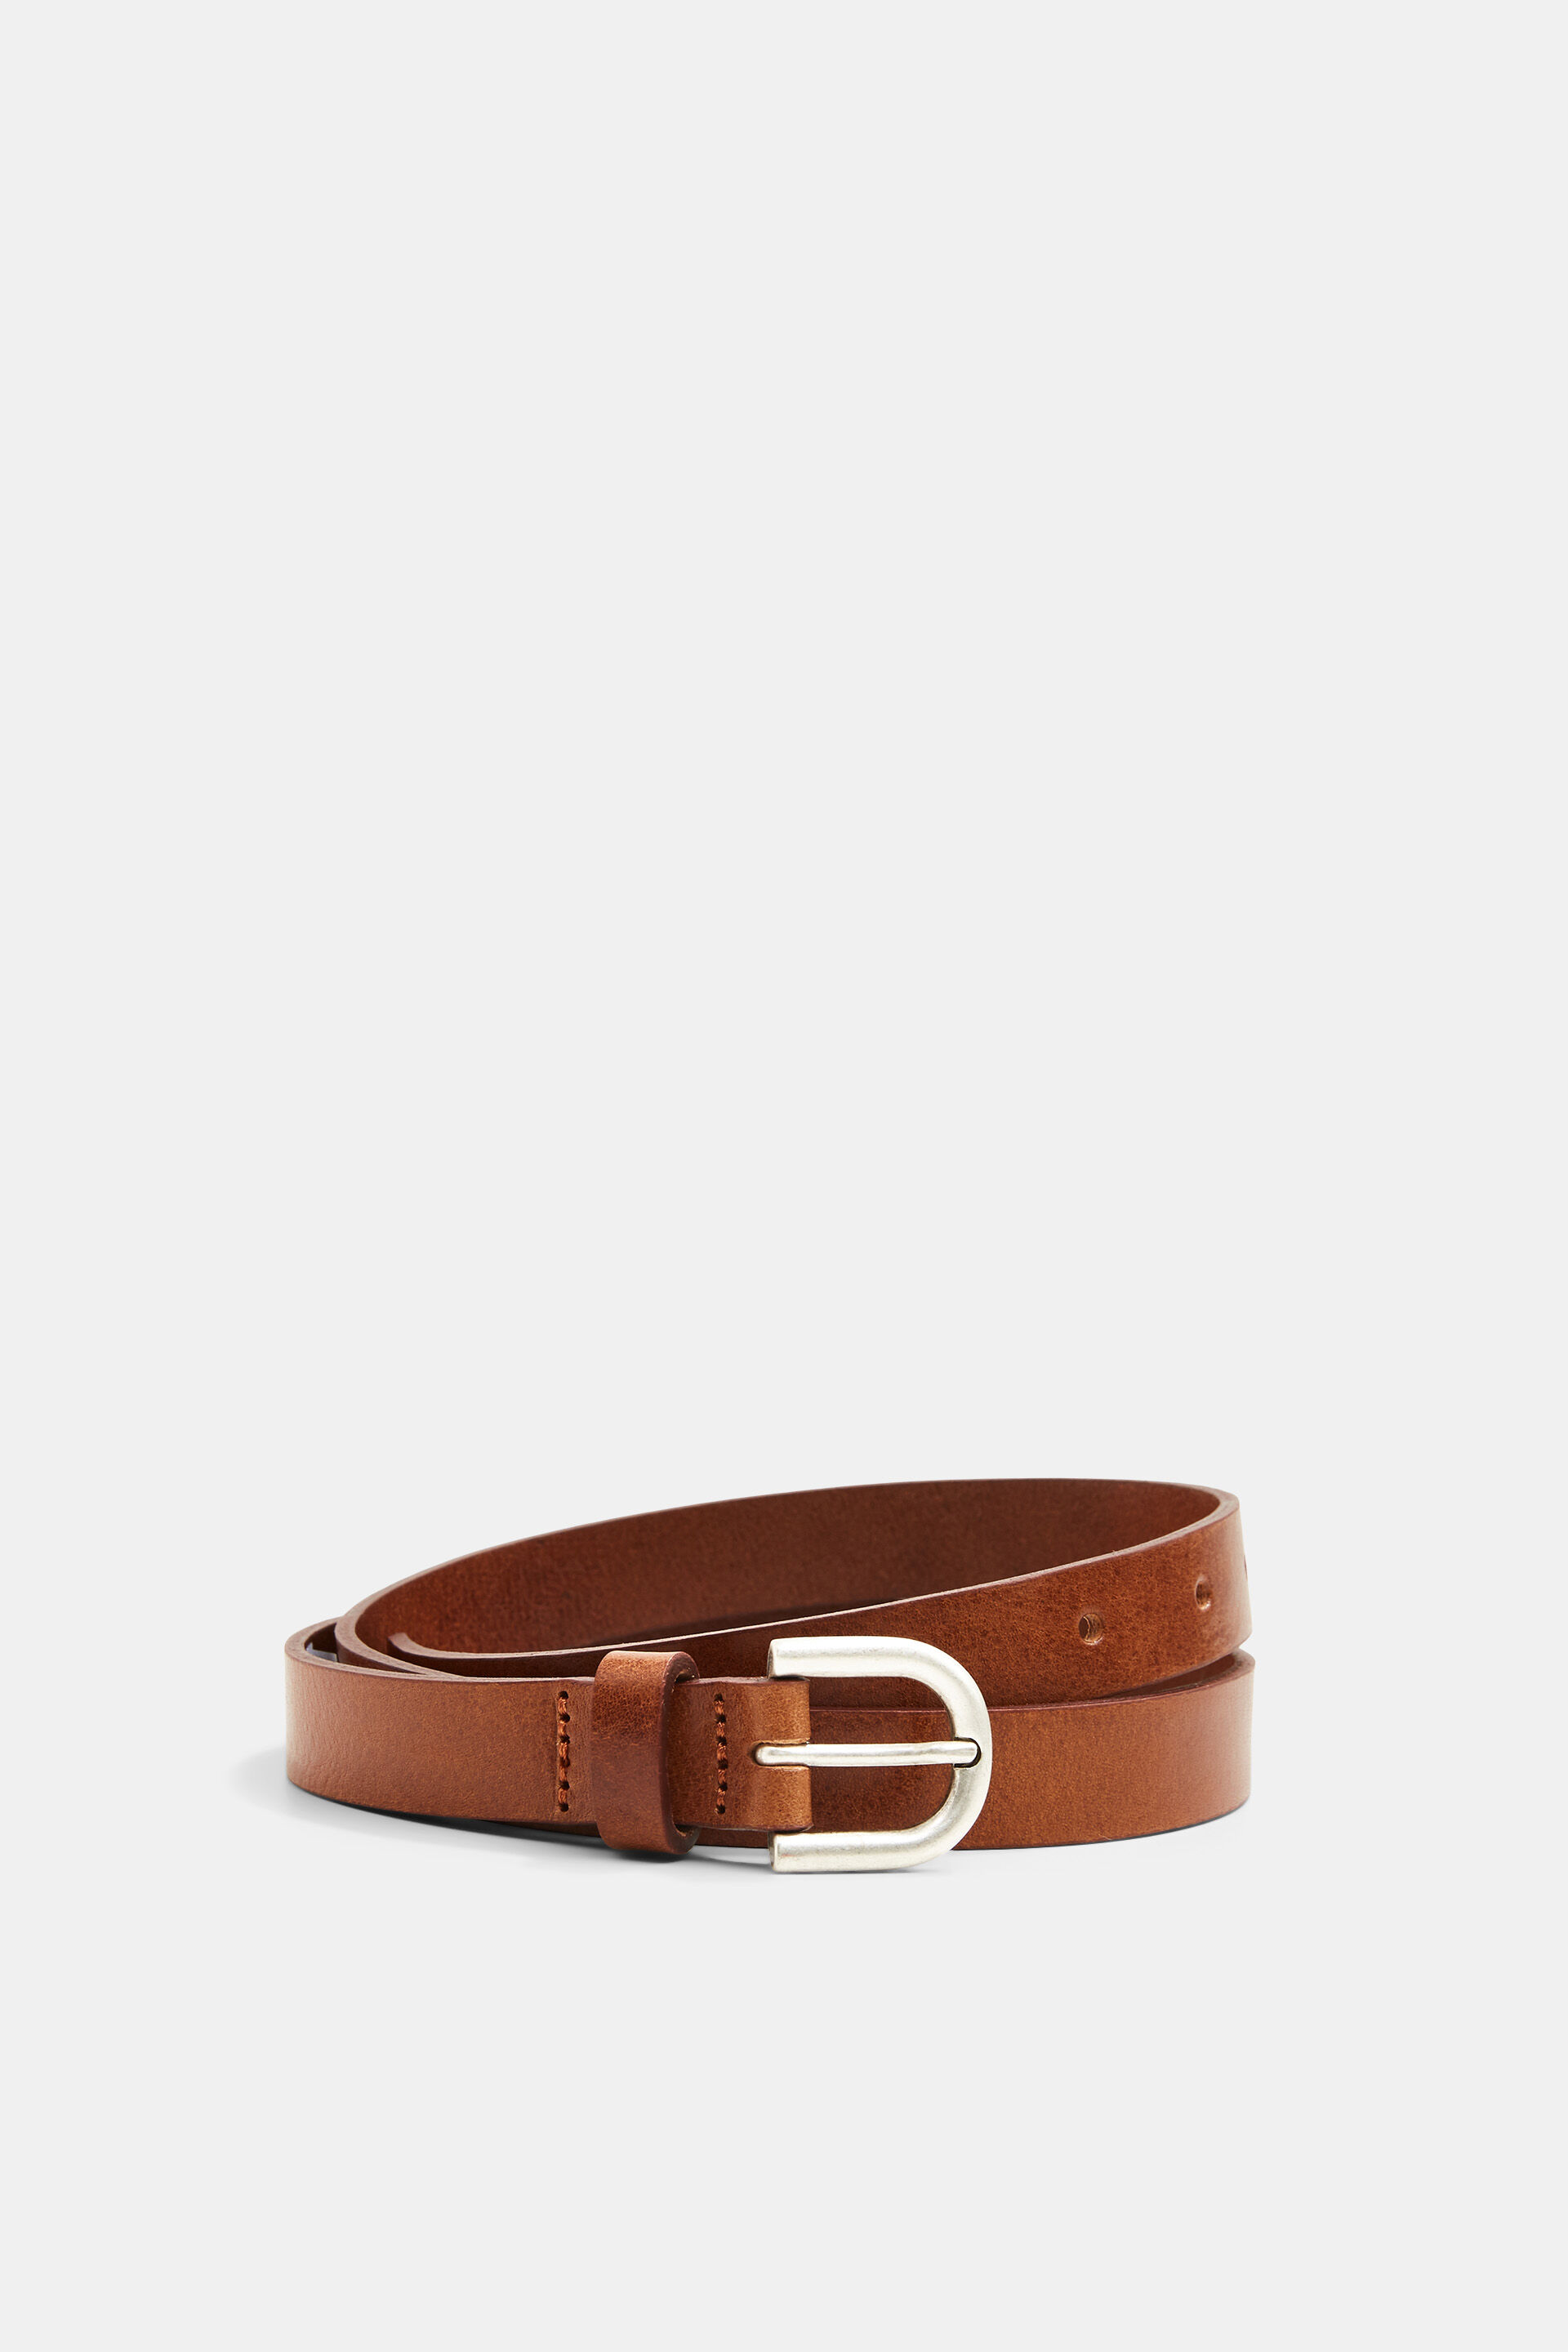 Esprit belt leather Narrow